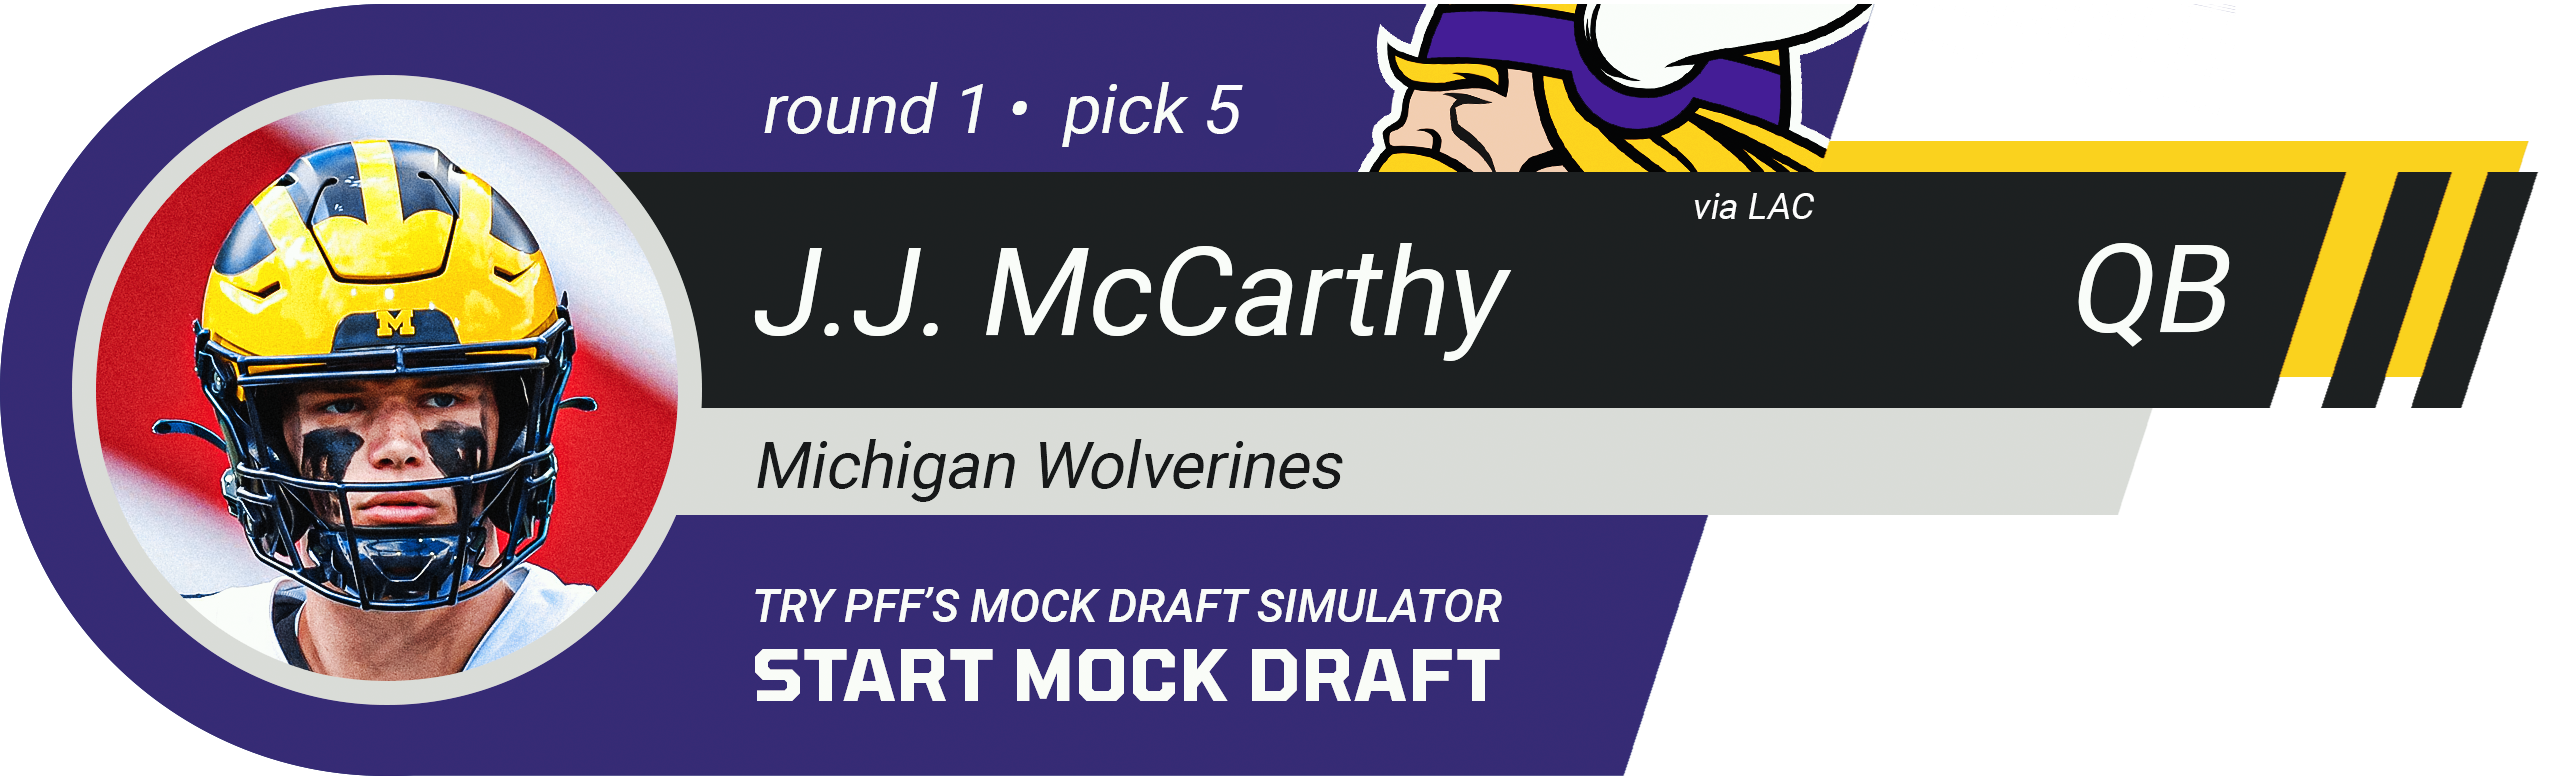 5. Minnesota Vikings: QB J.J. McCarthy, Michigan